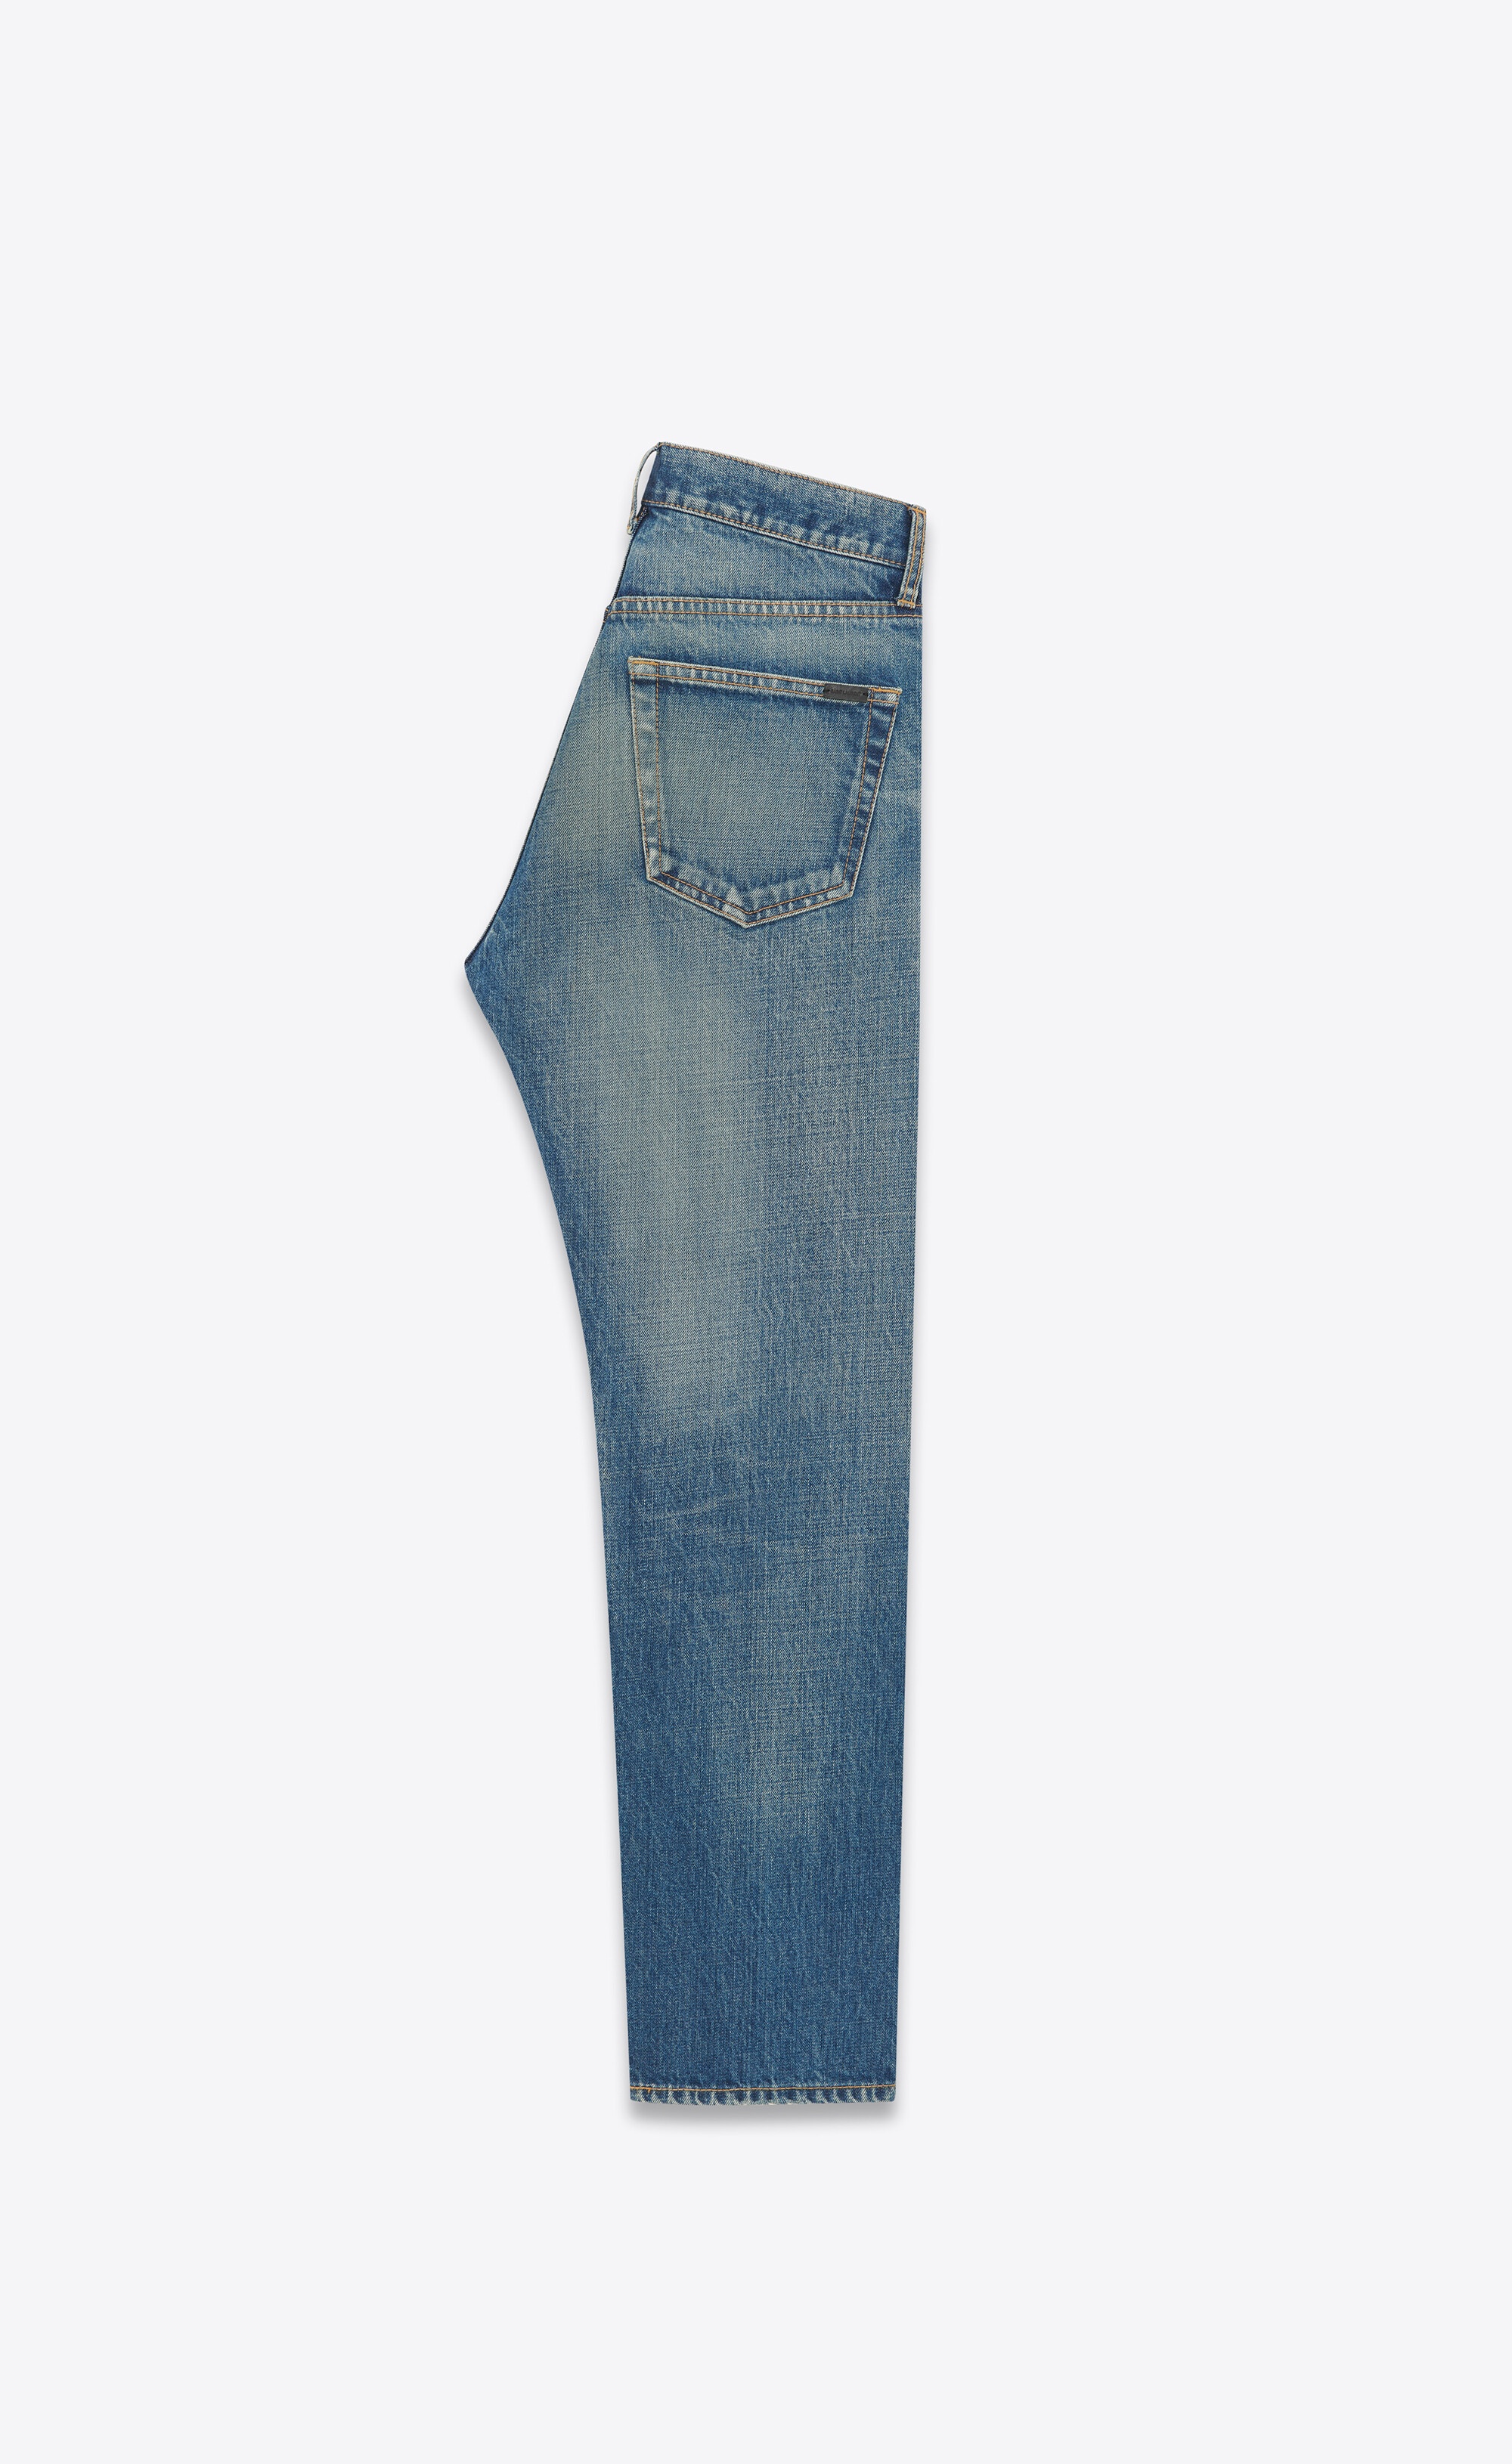 mick jeans in vintage blue - 2